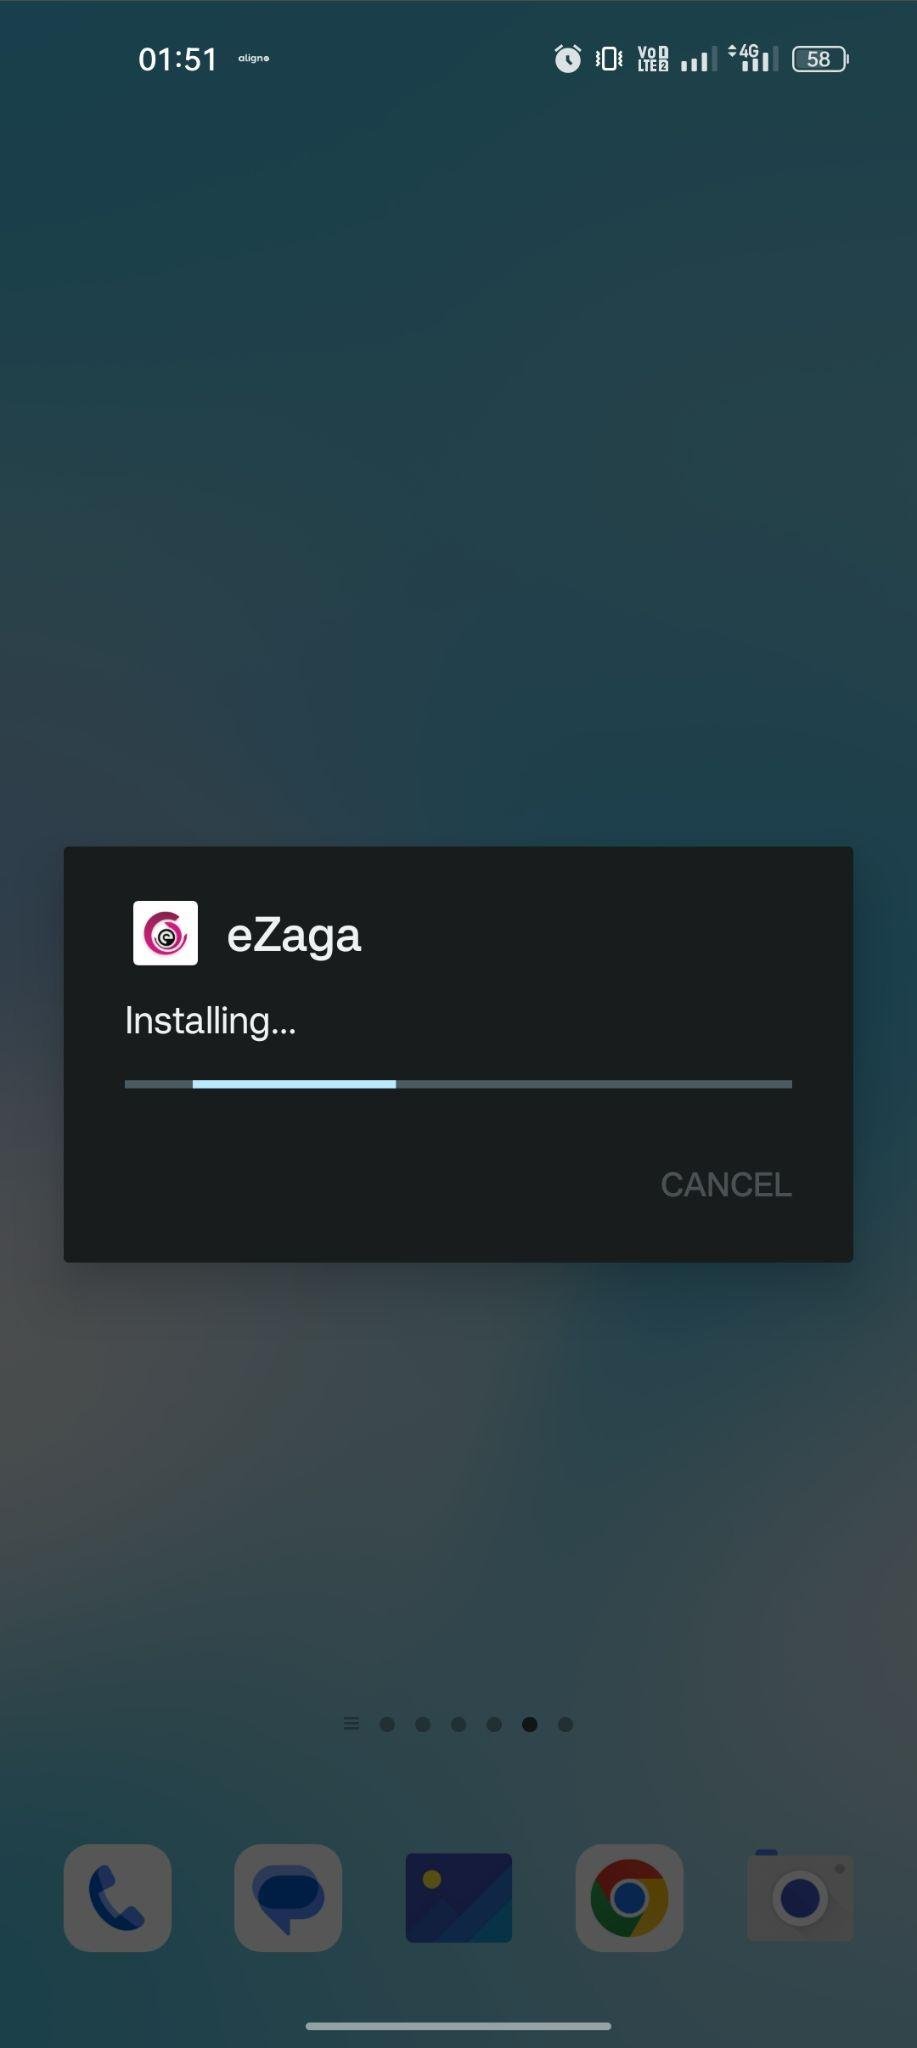 eZaga apk installing